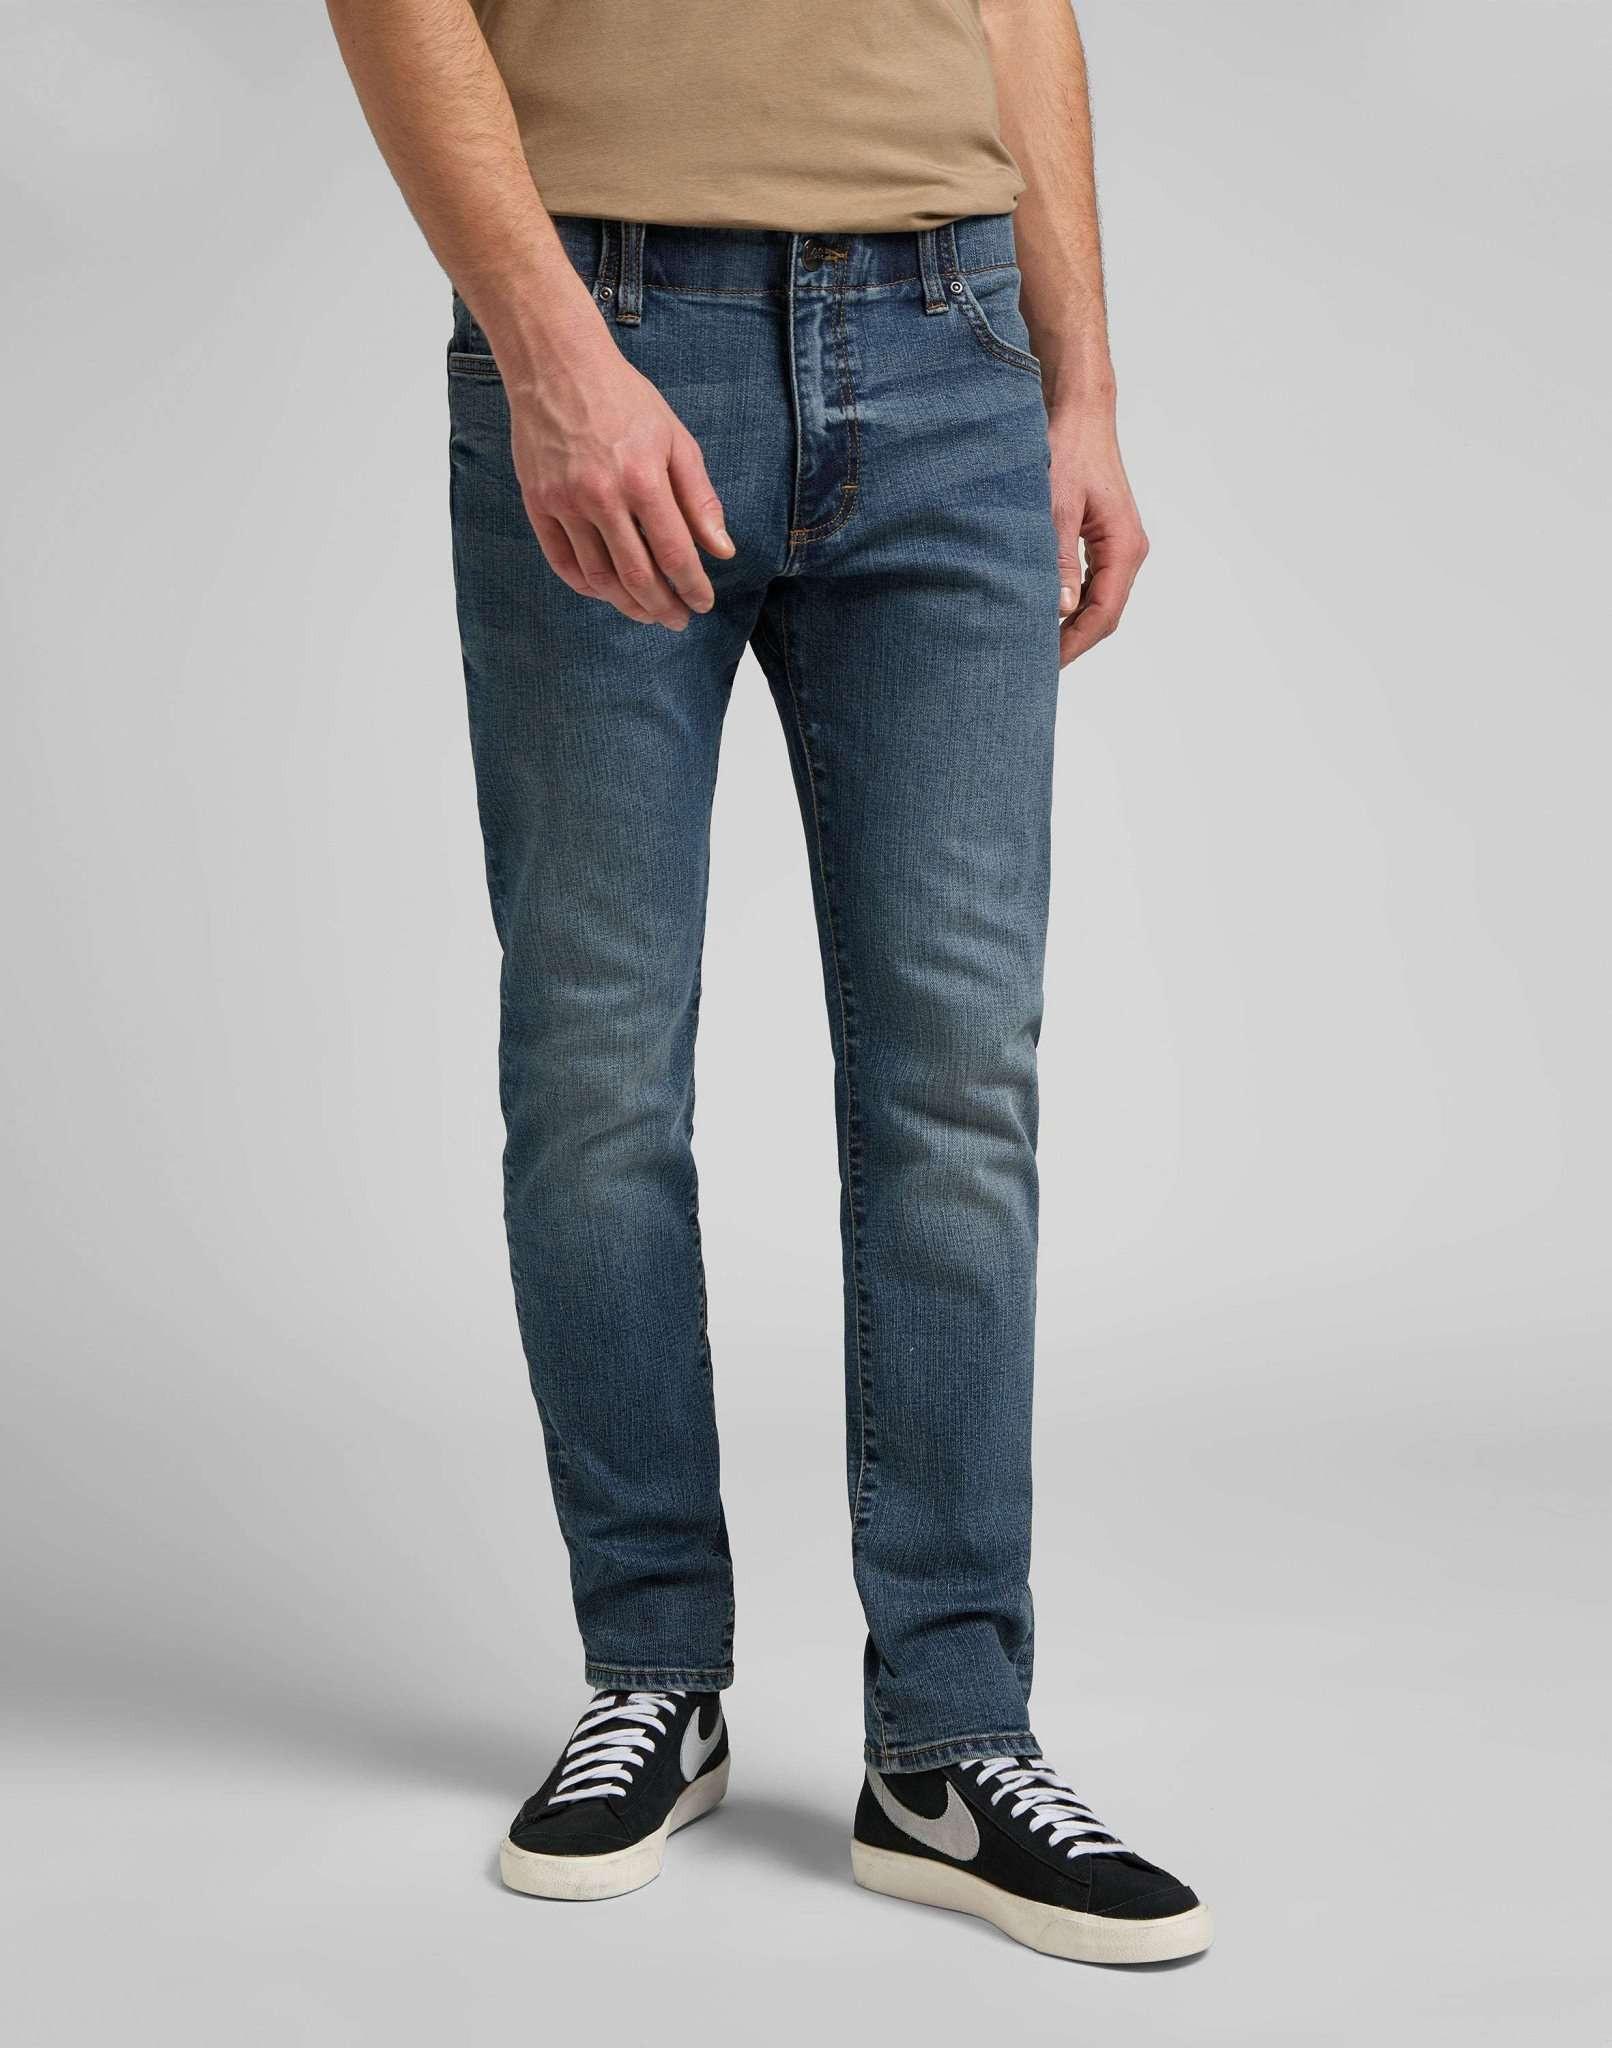 Jeans Skinny Fit Xm Herren Blau Denim L34/W34 von Lee